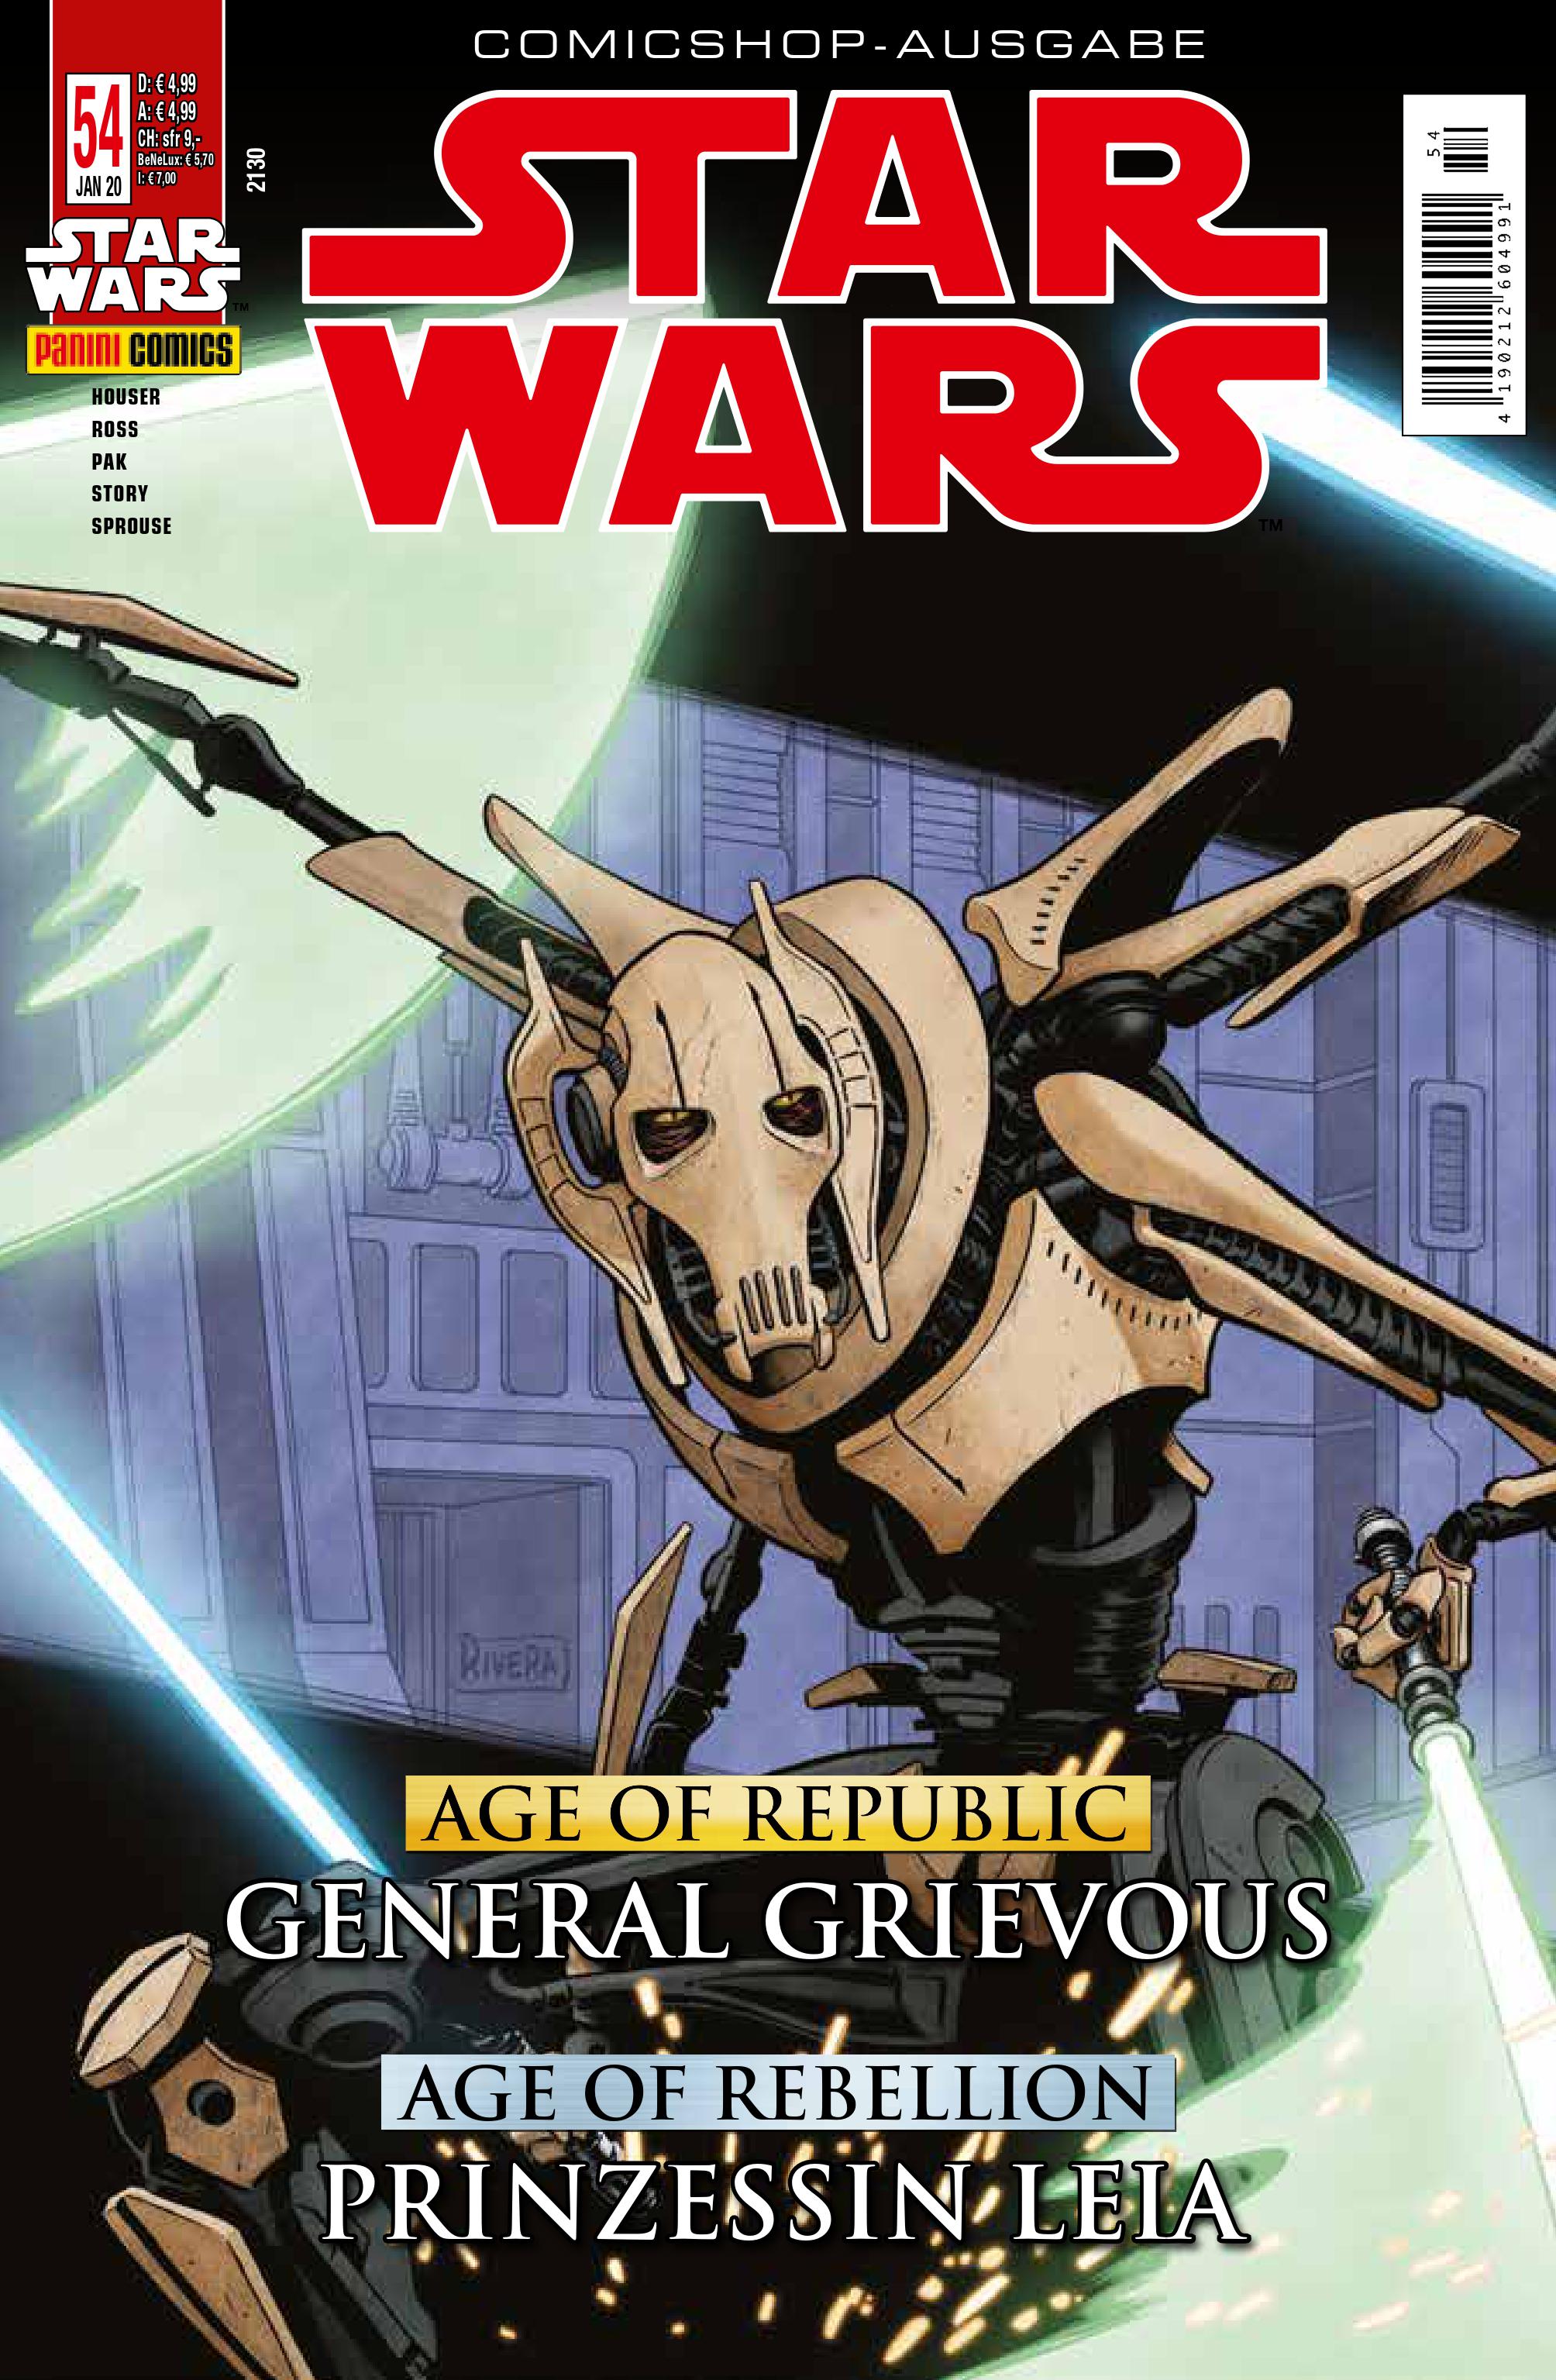 Star Wars #54 (Comicshop-Ausgabe) (22.01.2020)